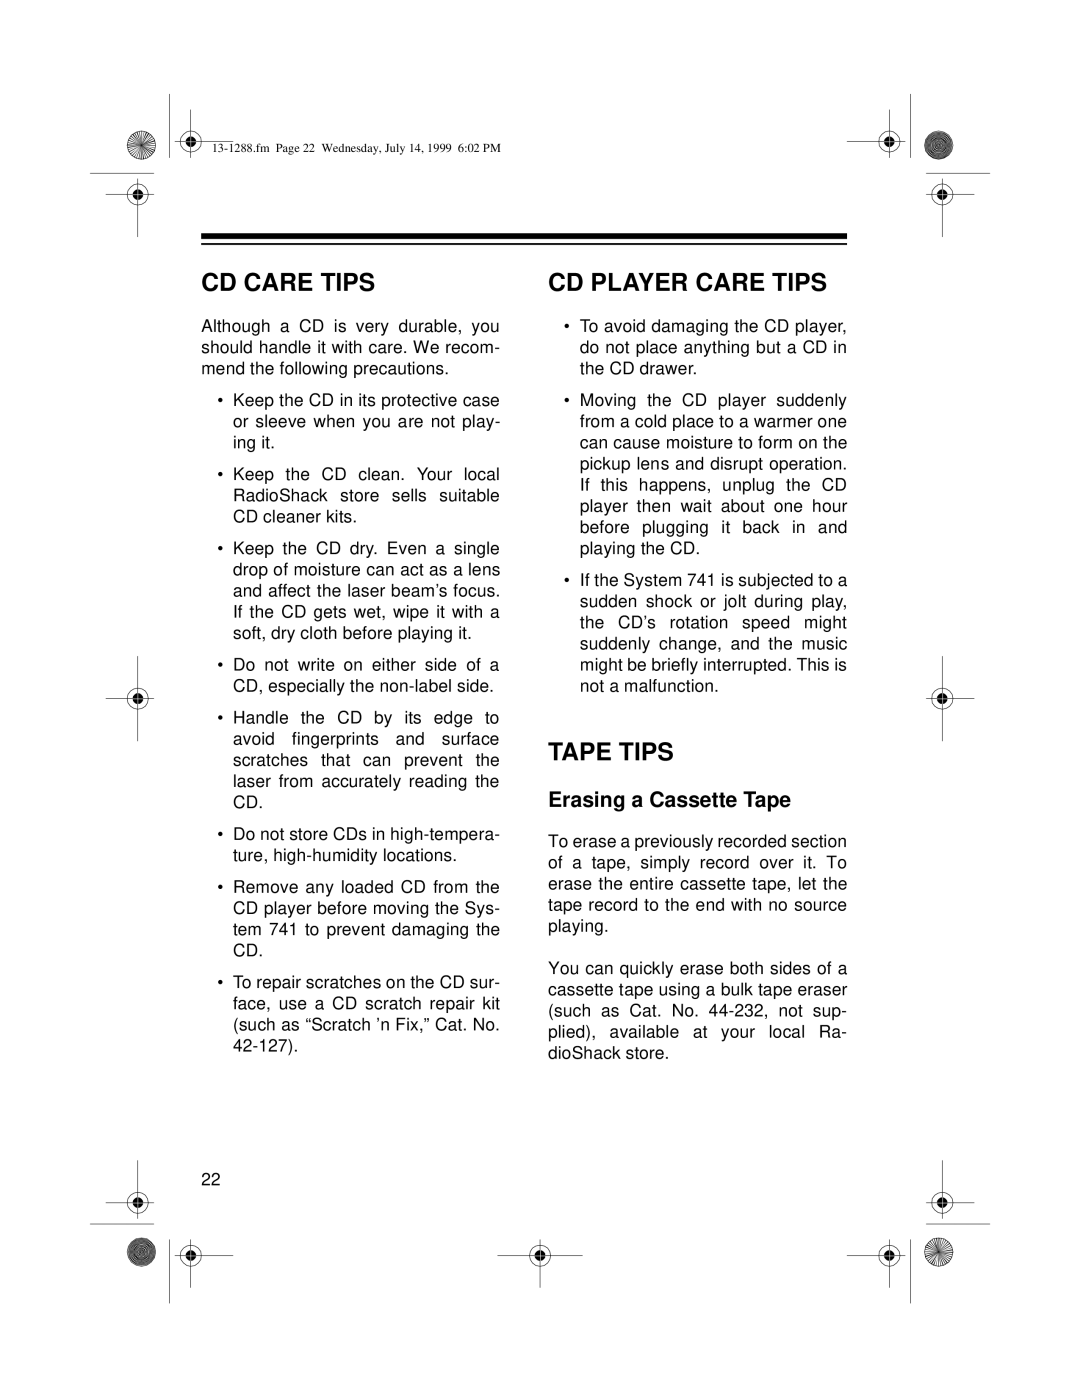 Optimus 13-1288 owner manual Cd Care Tips, Cd Player Care Tips, Tape Tips, Erasing a Cassette Tape 